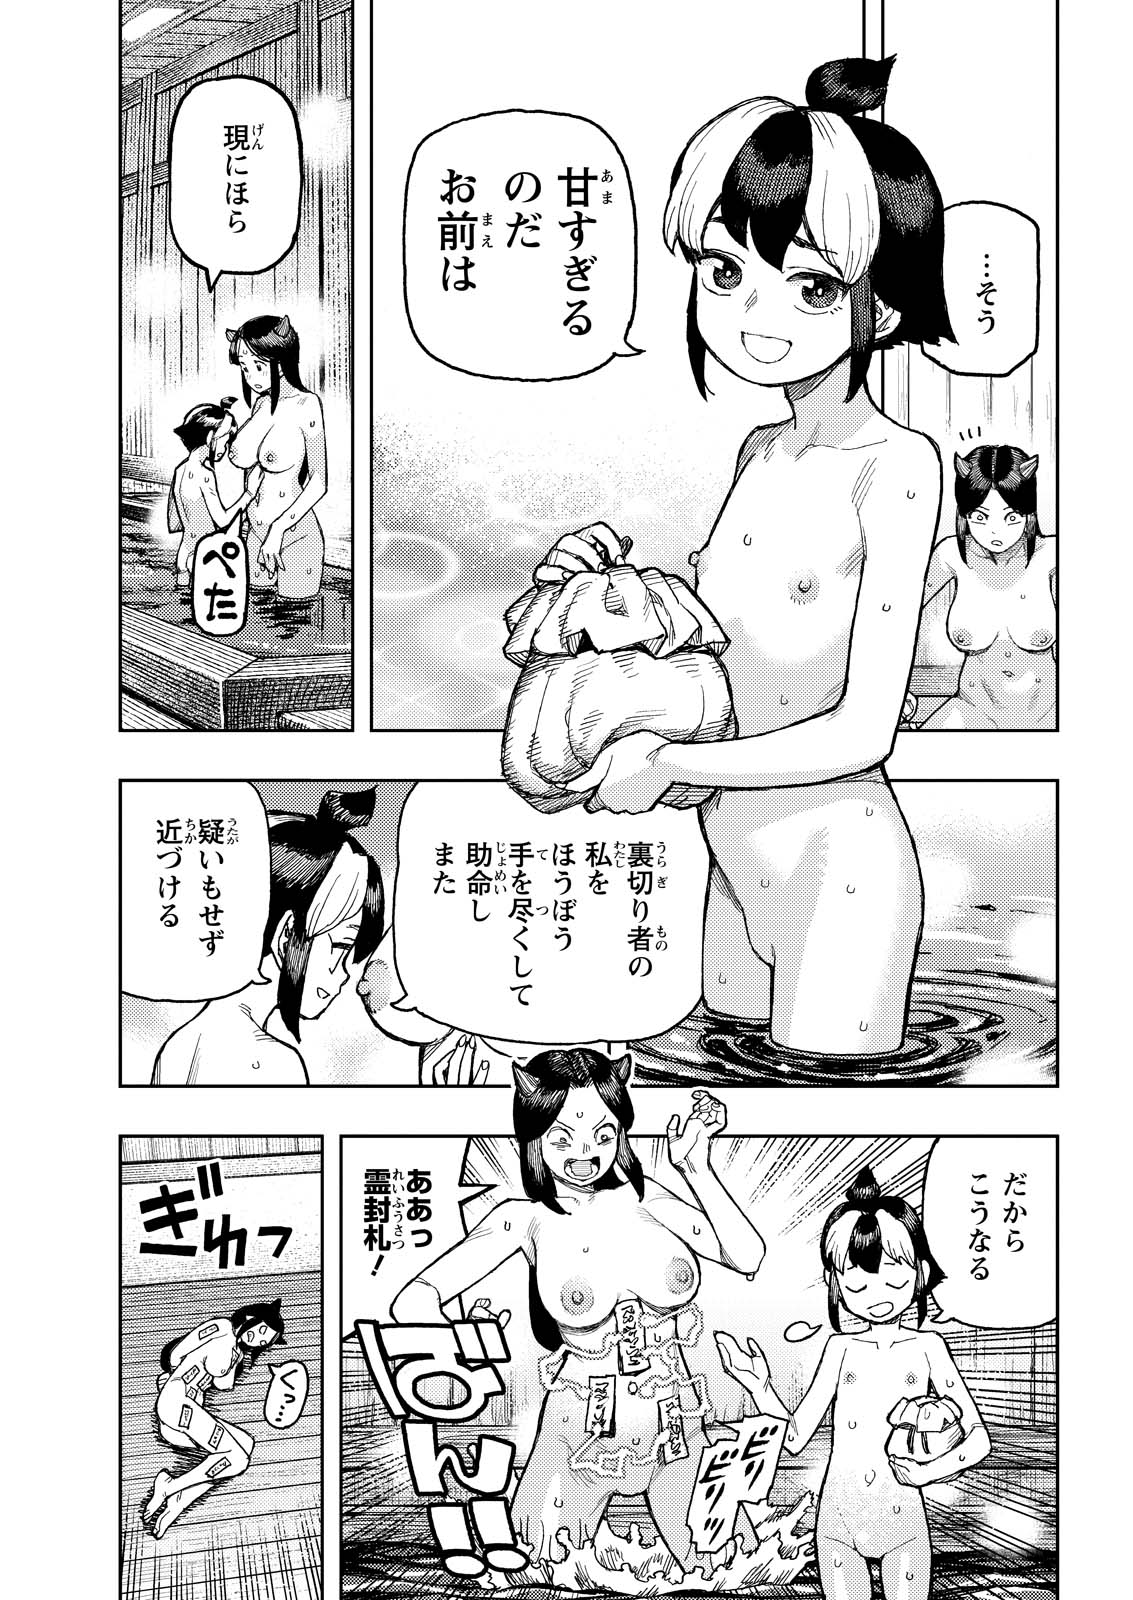 Tsugumomo - Chapter 167 - Page 13